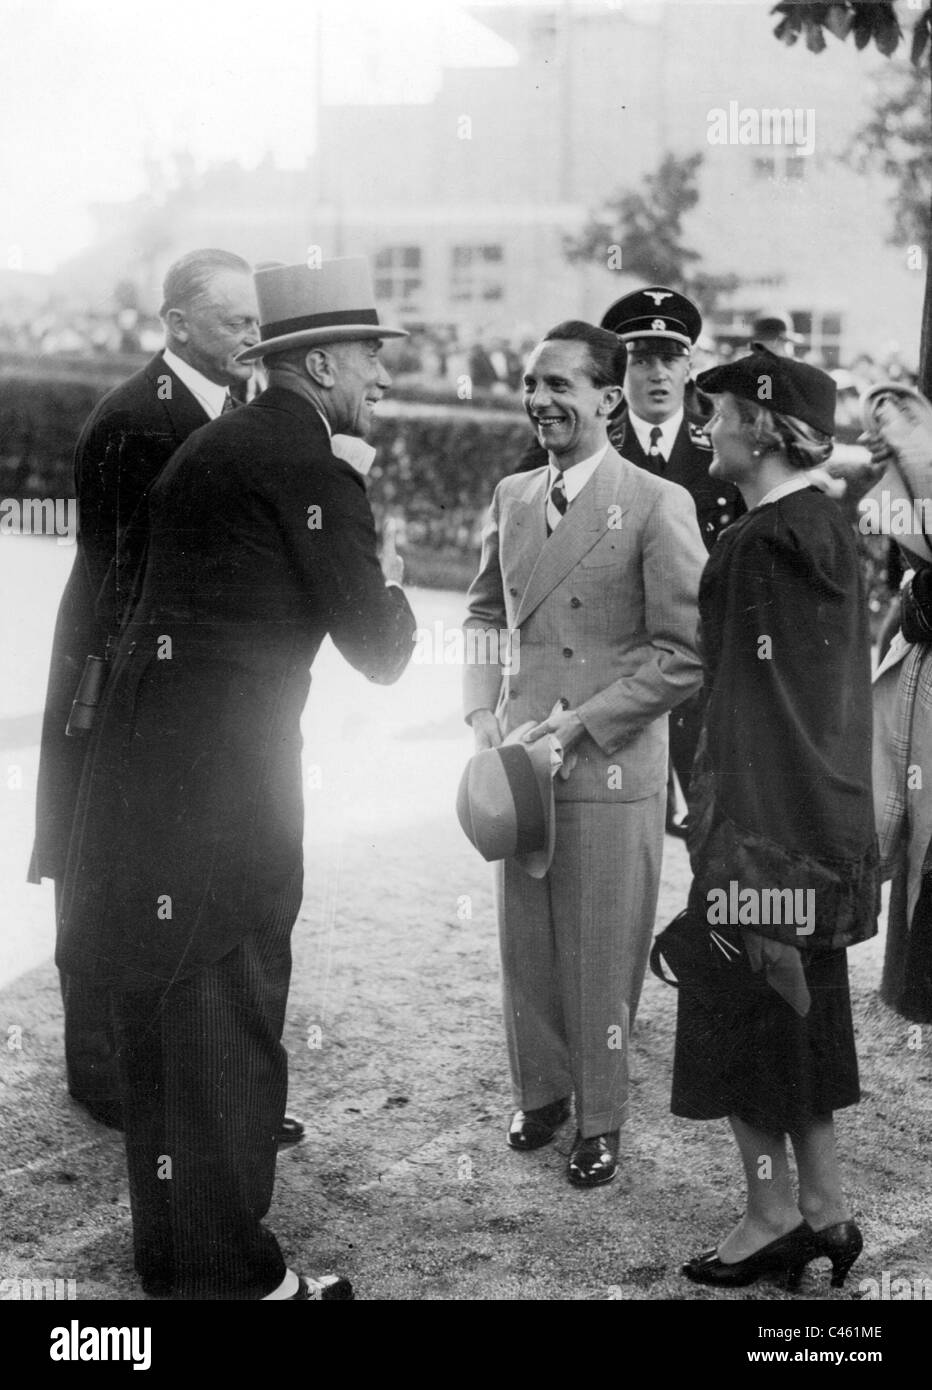 Ambasciatore von Papen, Giuseppe e Magda Goebbels Foto Stock